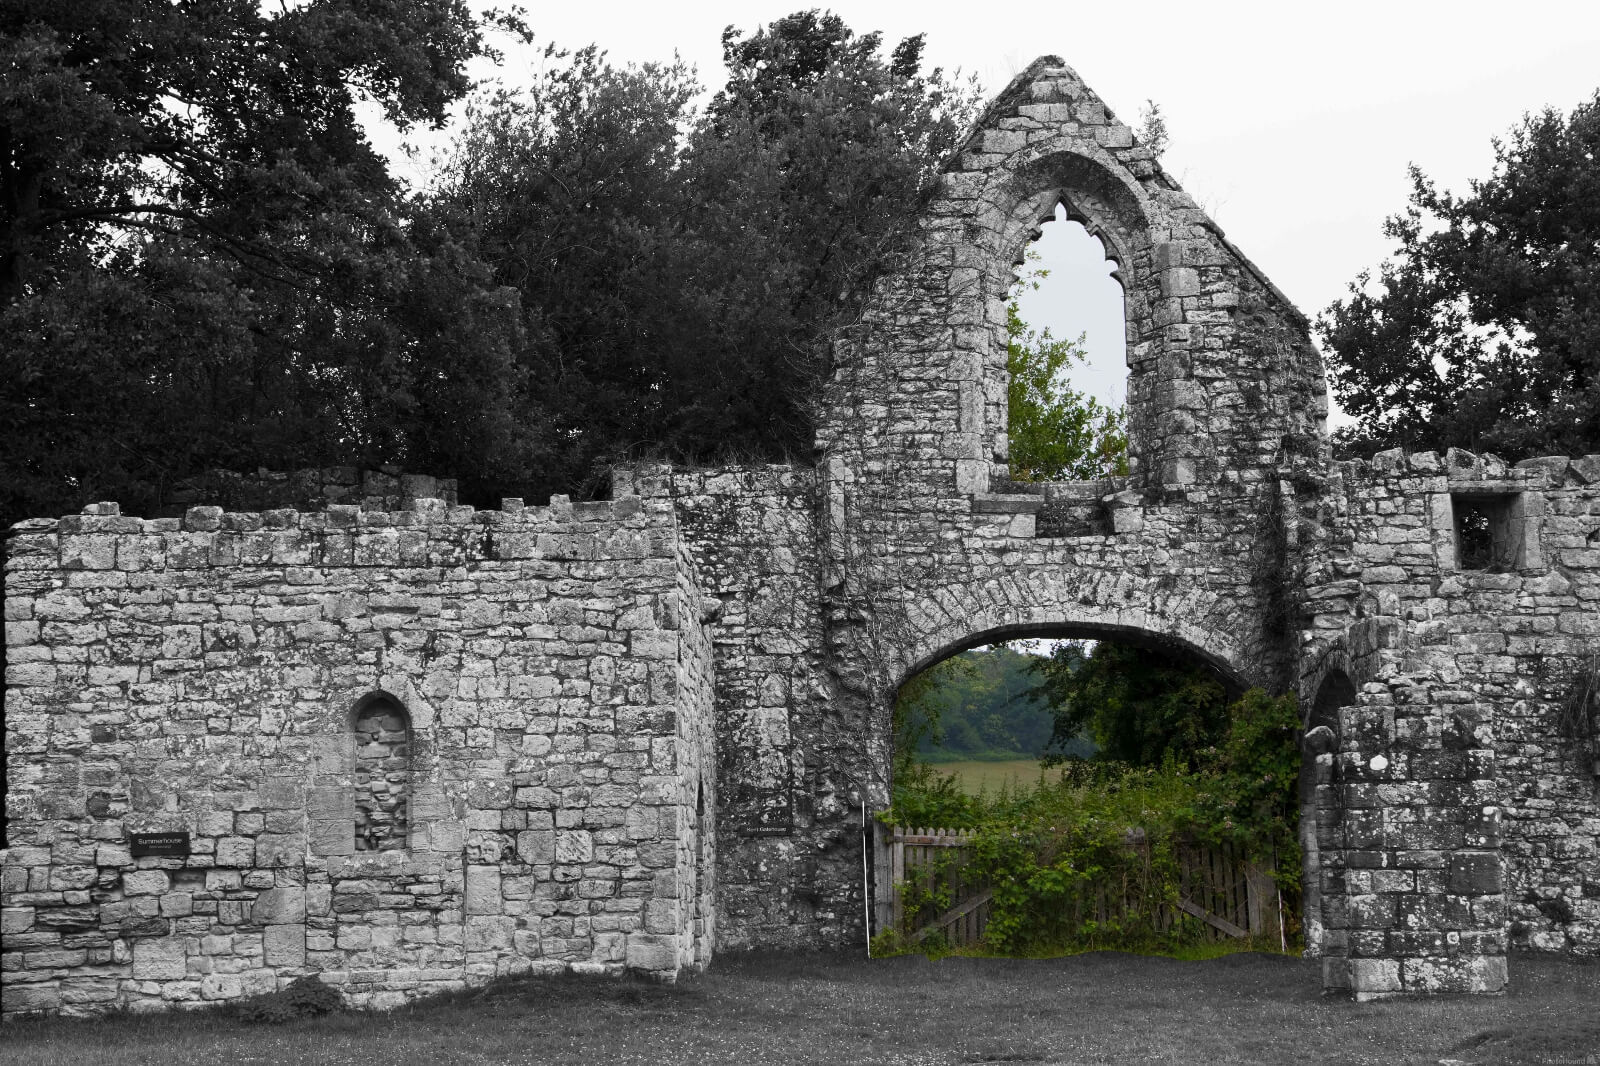 Image of Bayham Abbey by David Marriott